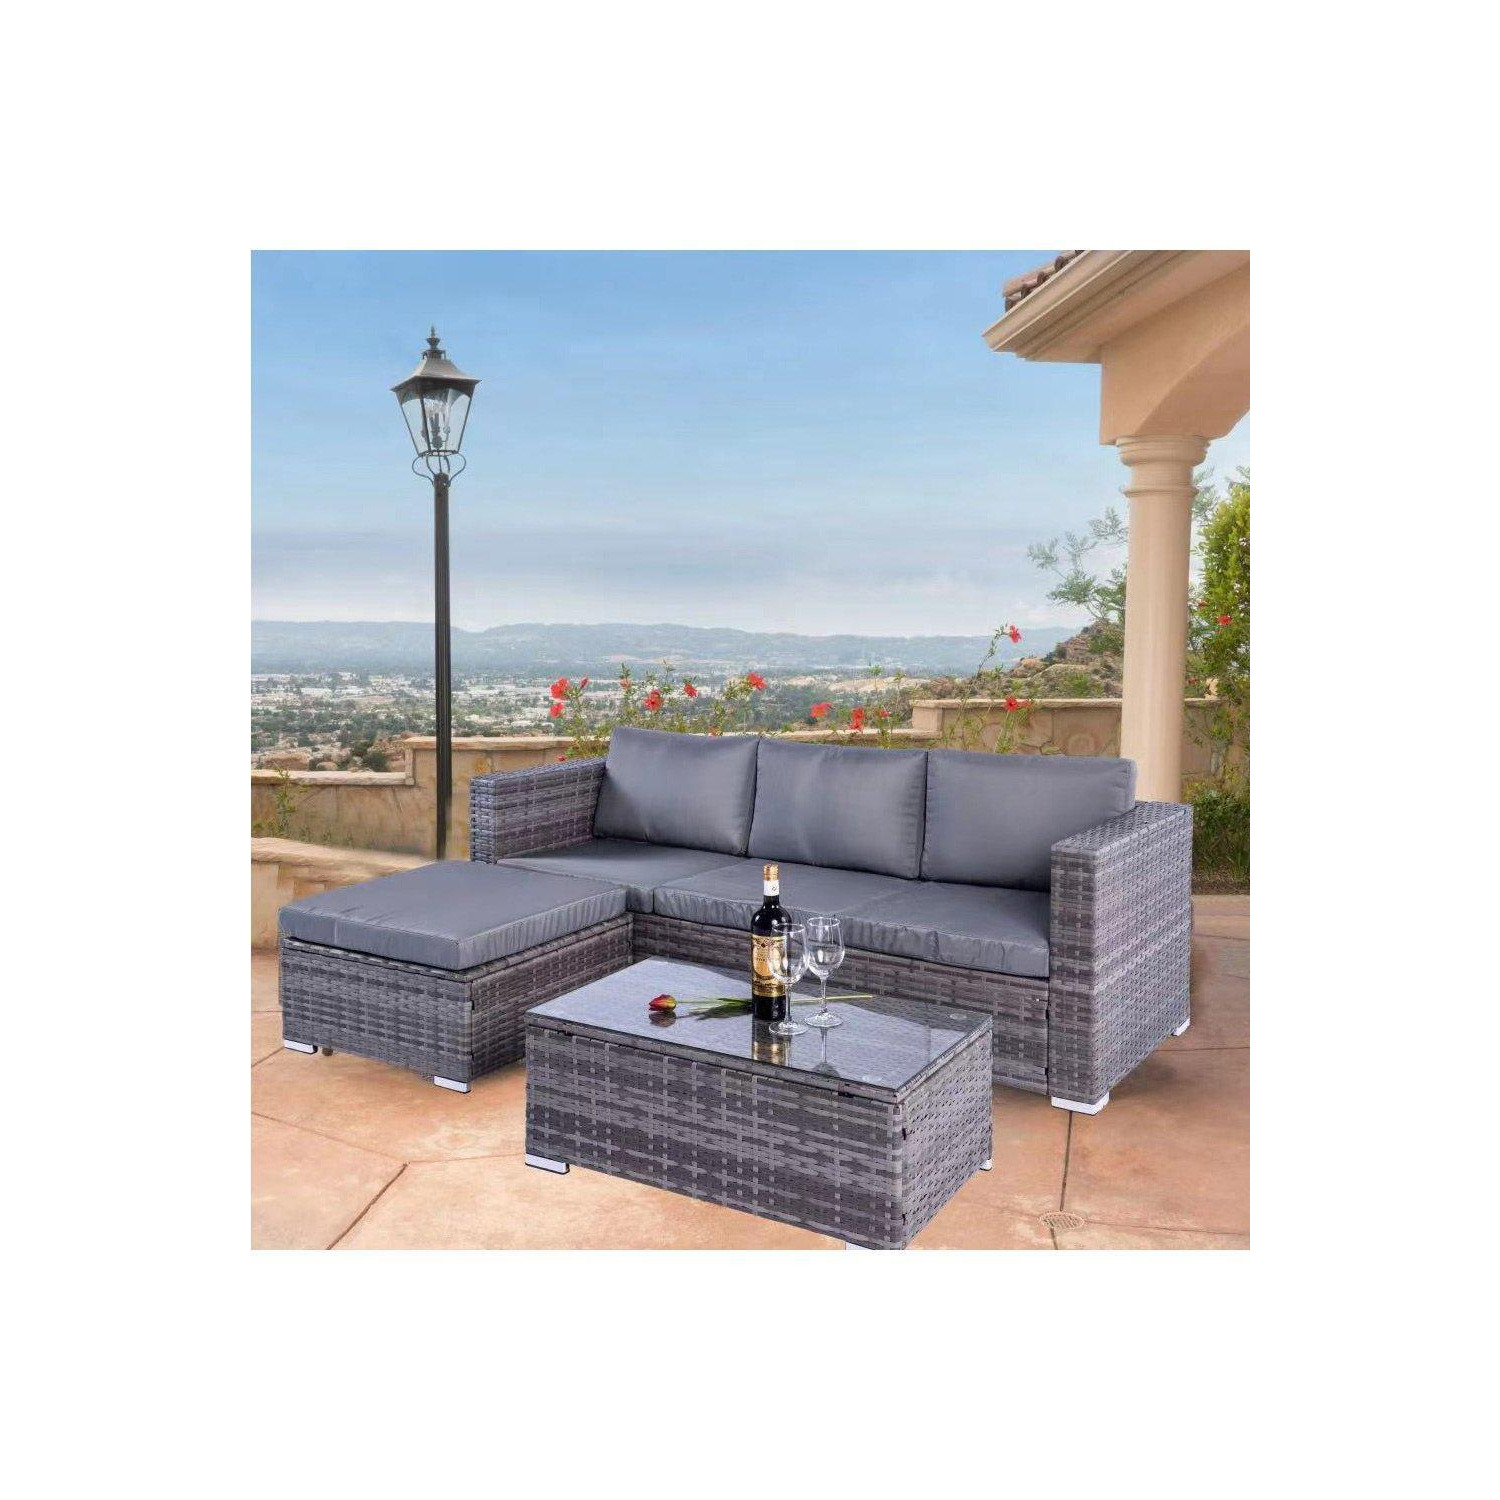 Dunham Grey 4 Seat Rattan Sofa Set with Coffee Table - image 1